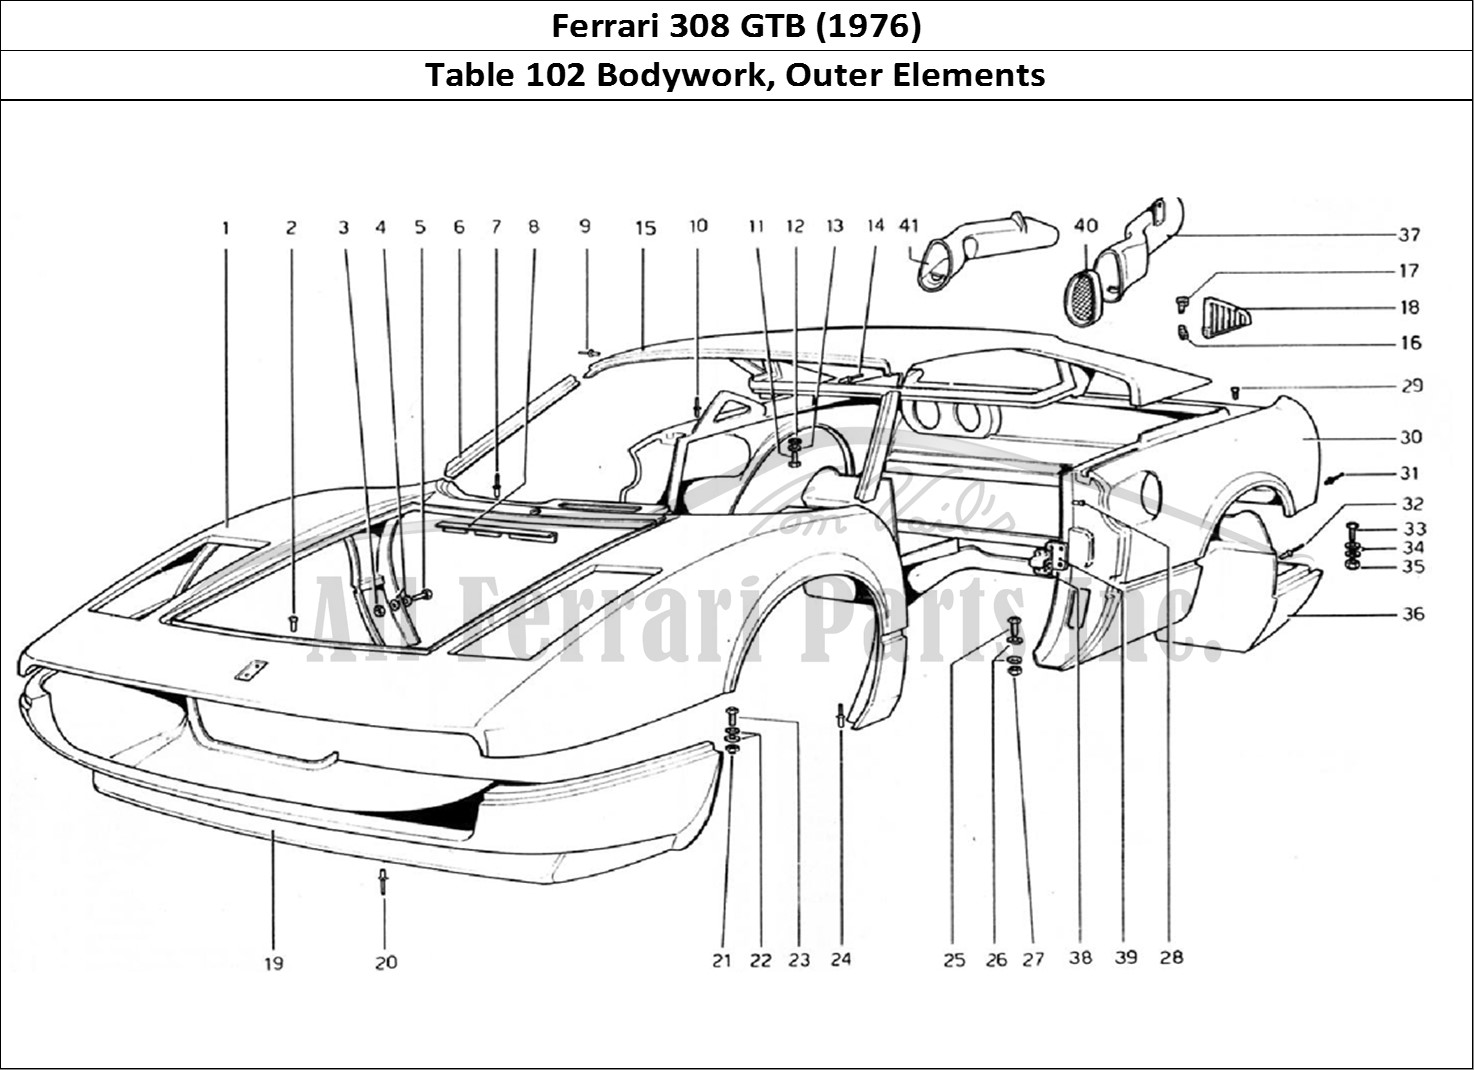 Ferrari Parts Ferrari 308 GTB (1976) Page 102 Body Shell - Outer Elemen